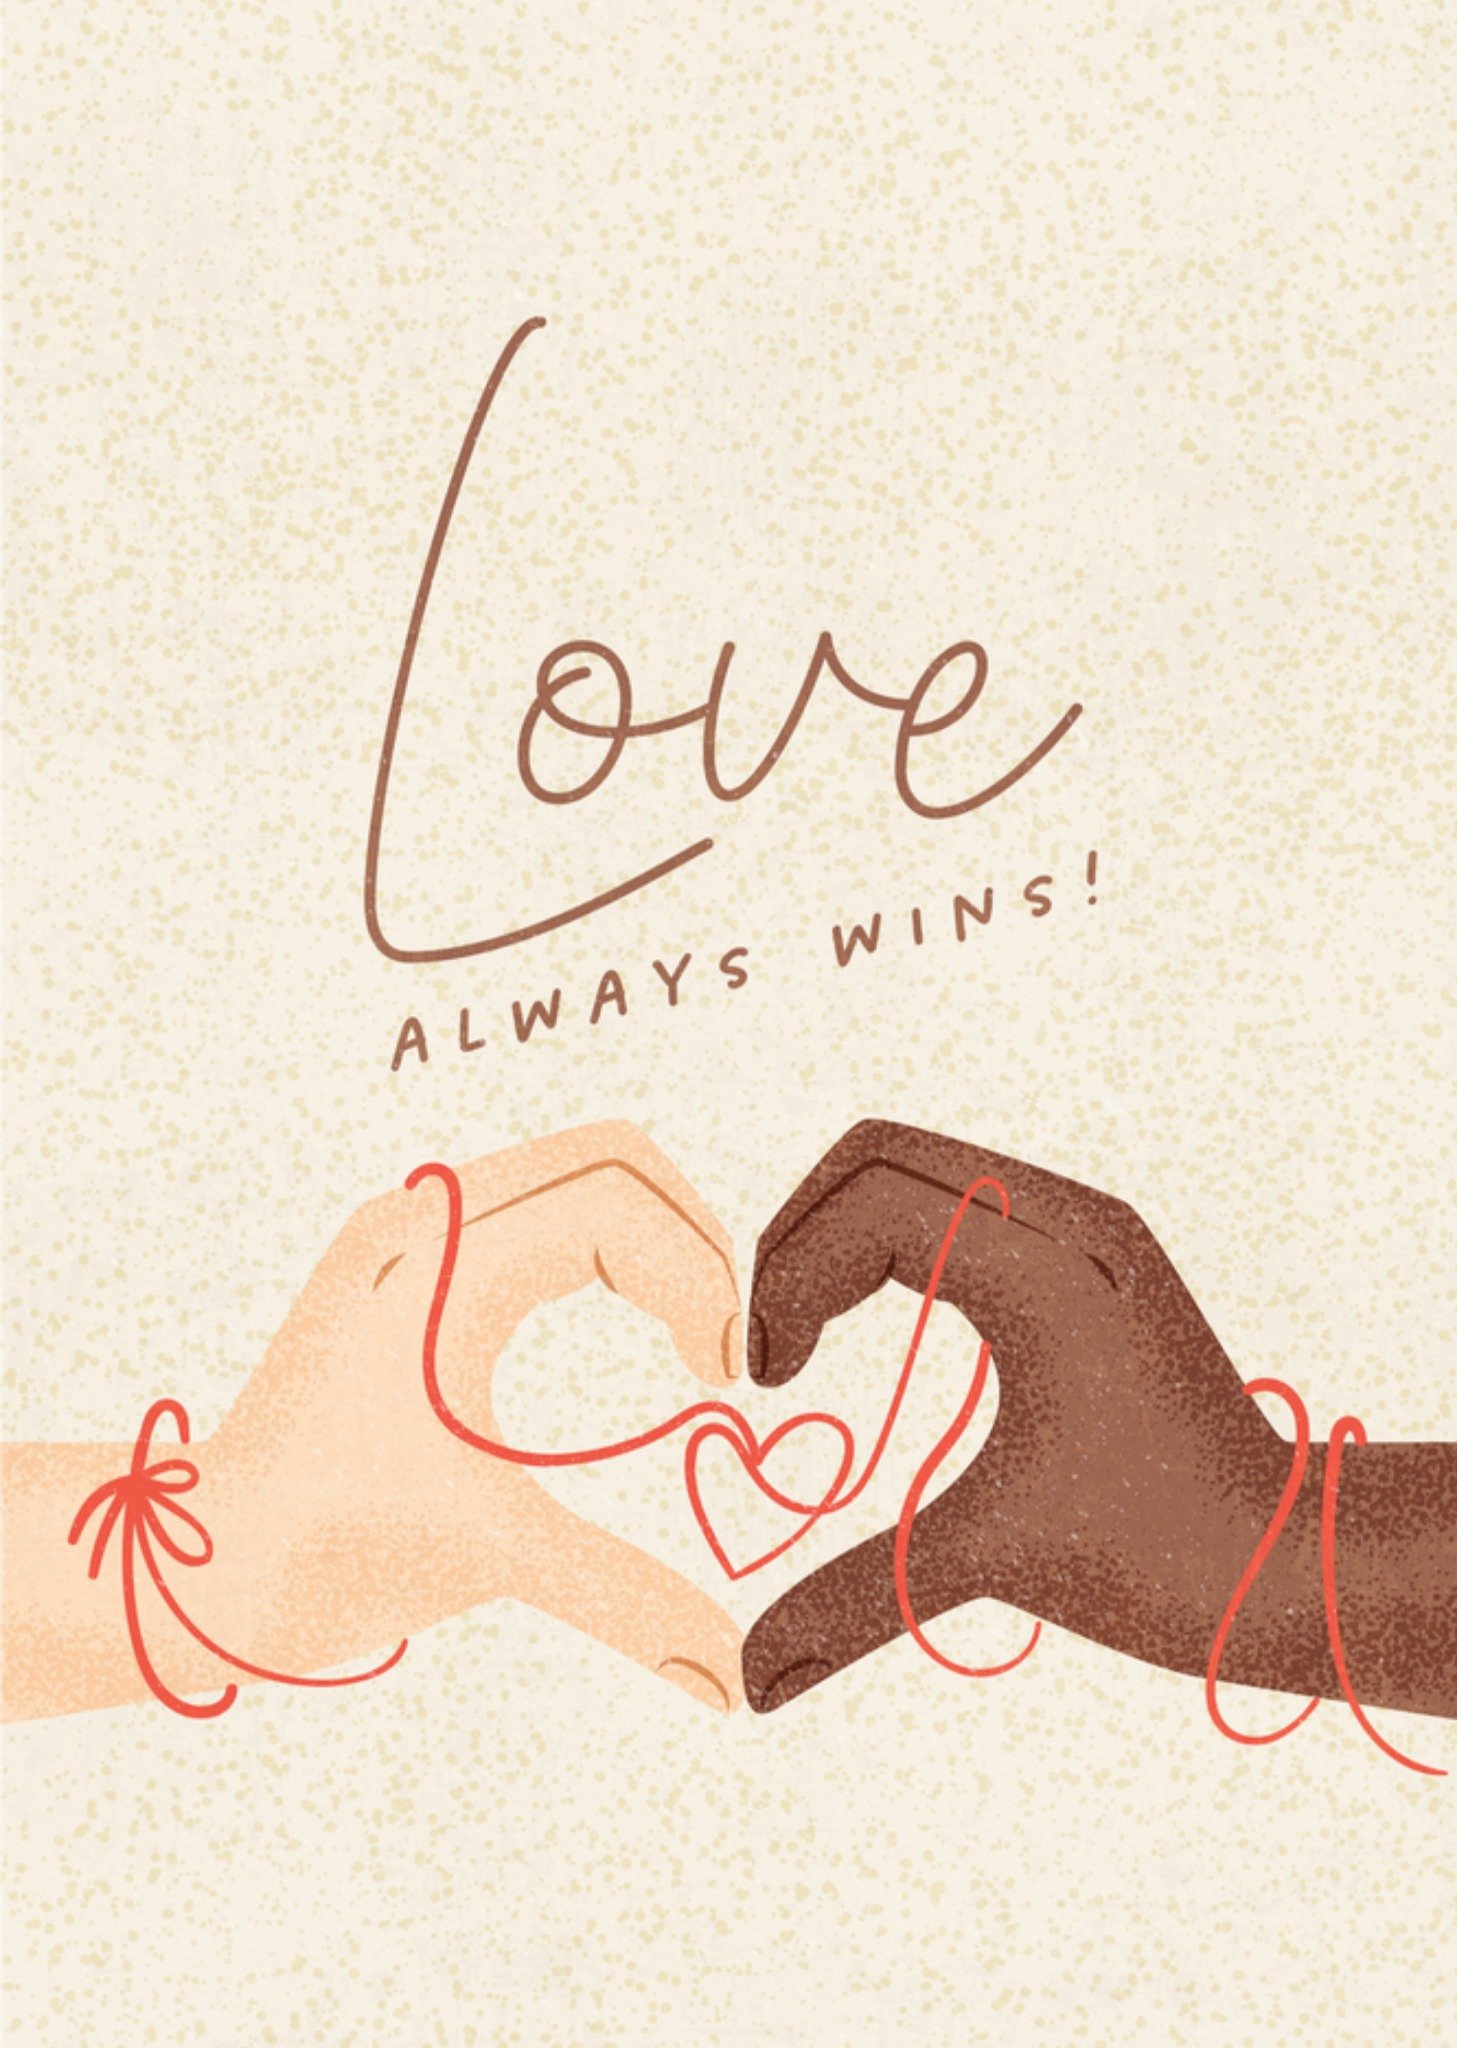 Melolelo - Huwelijkskaart - Love always wins